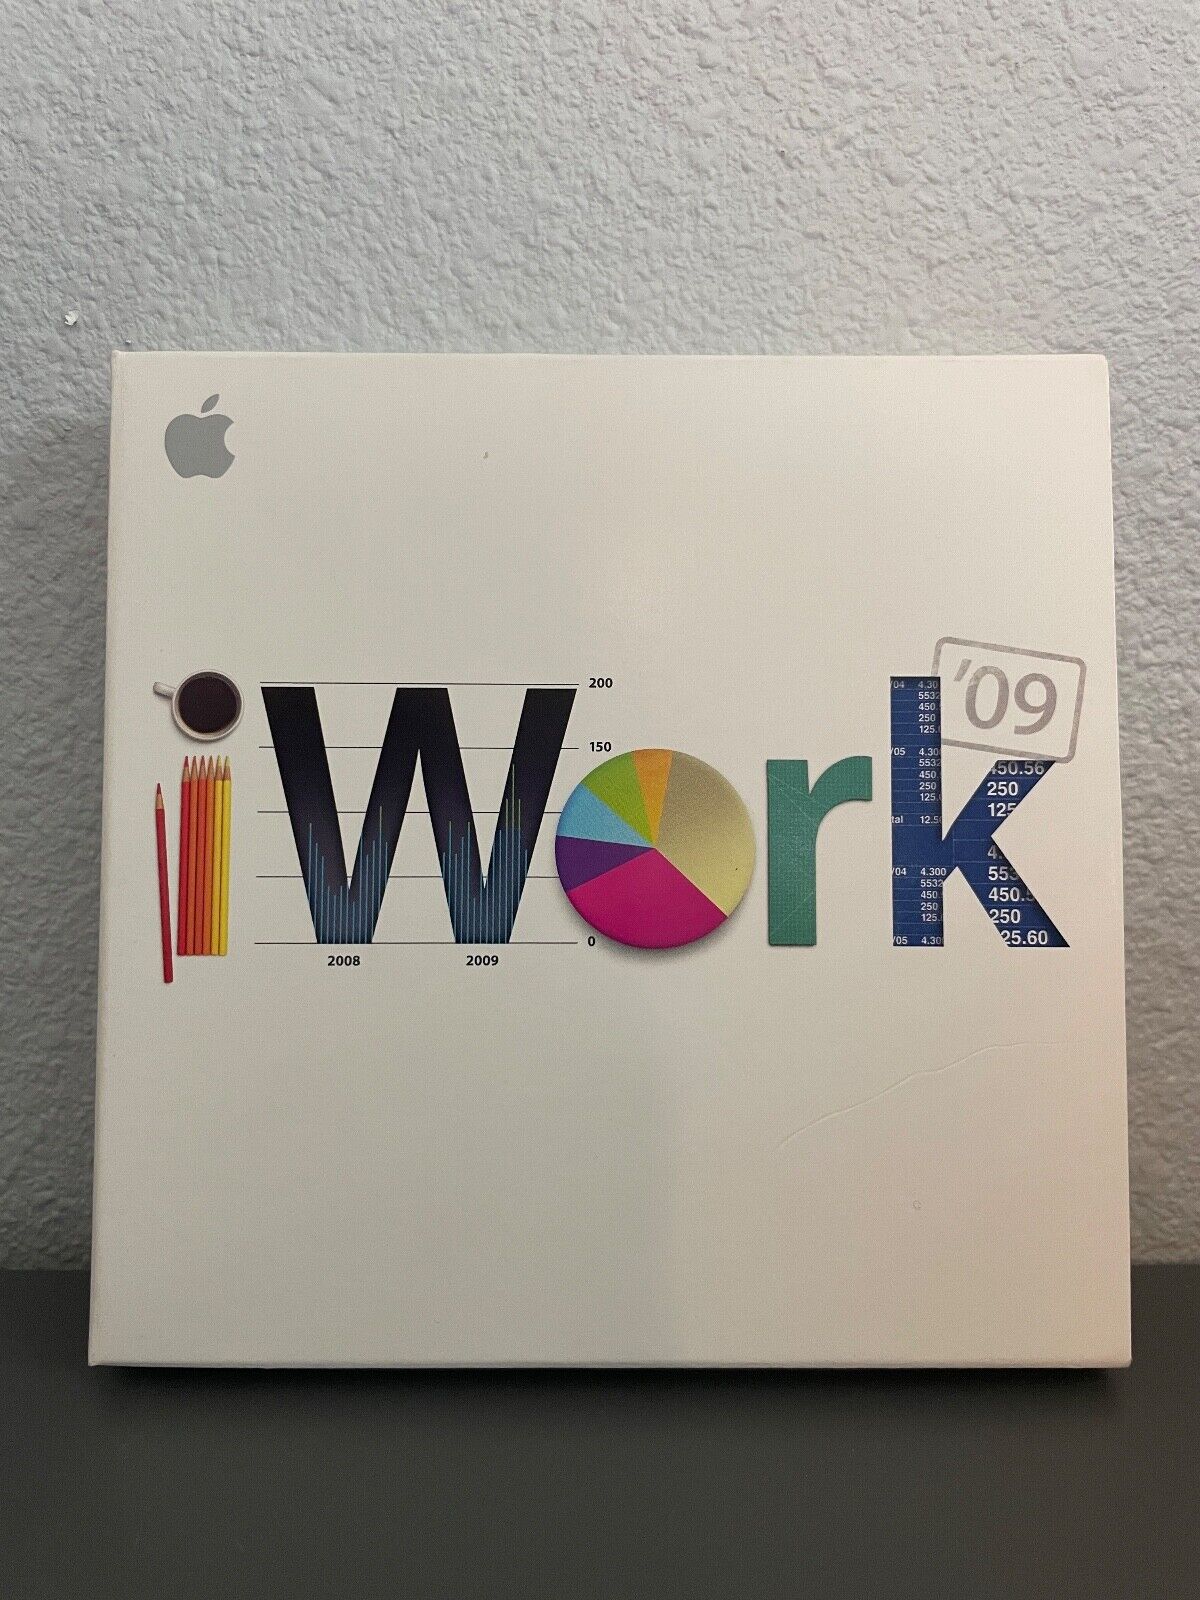 Apple i Work 2009 Install CD version 9.0.1